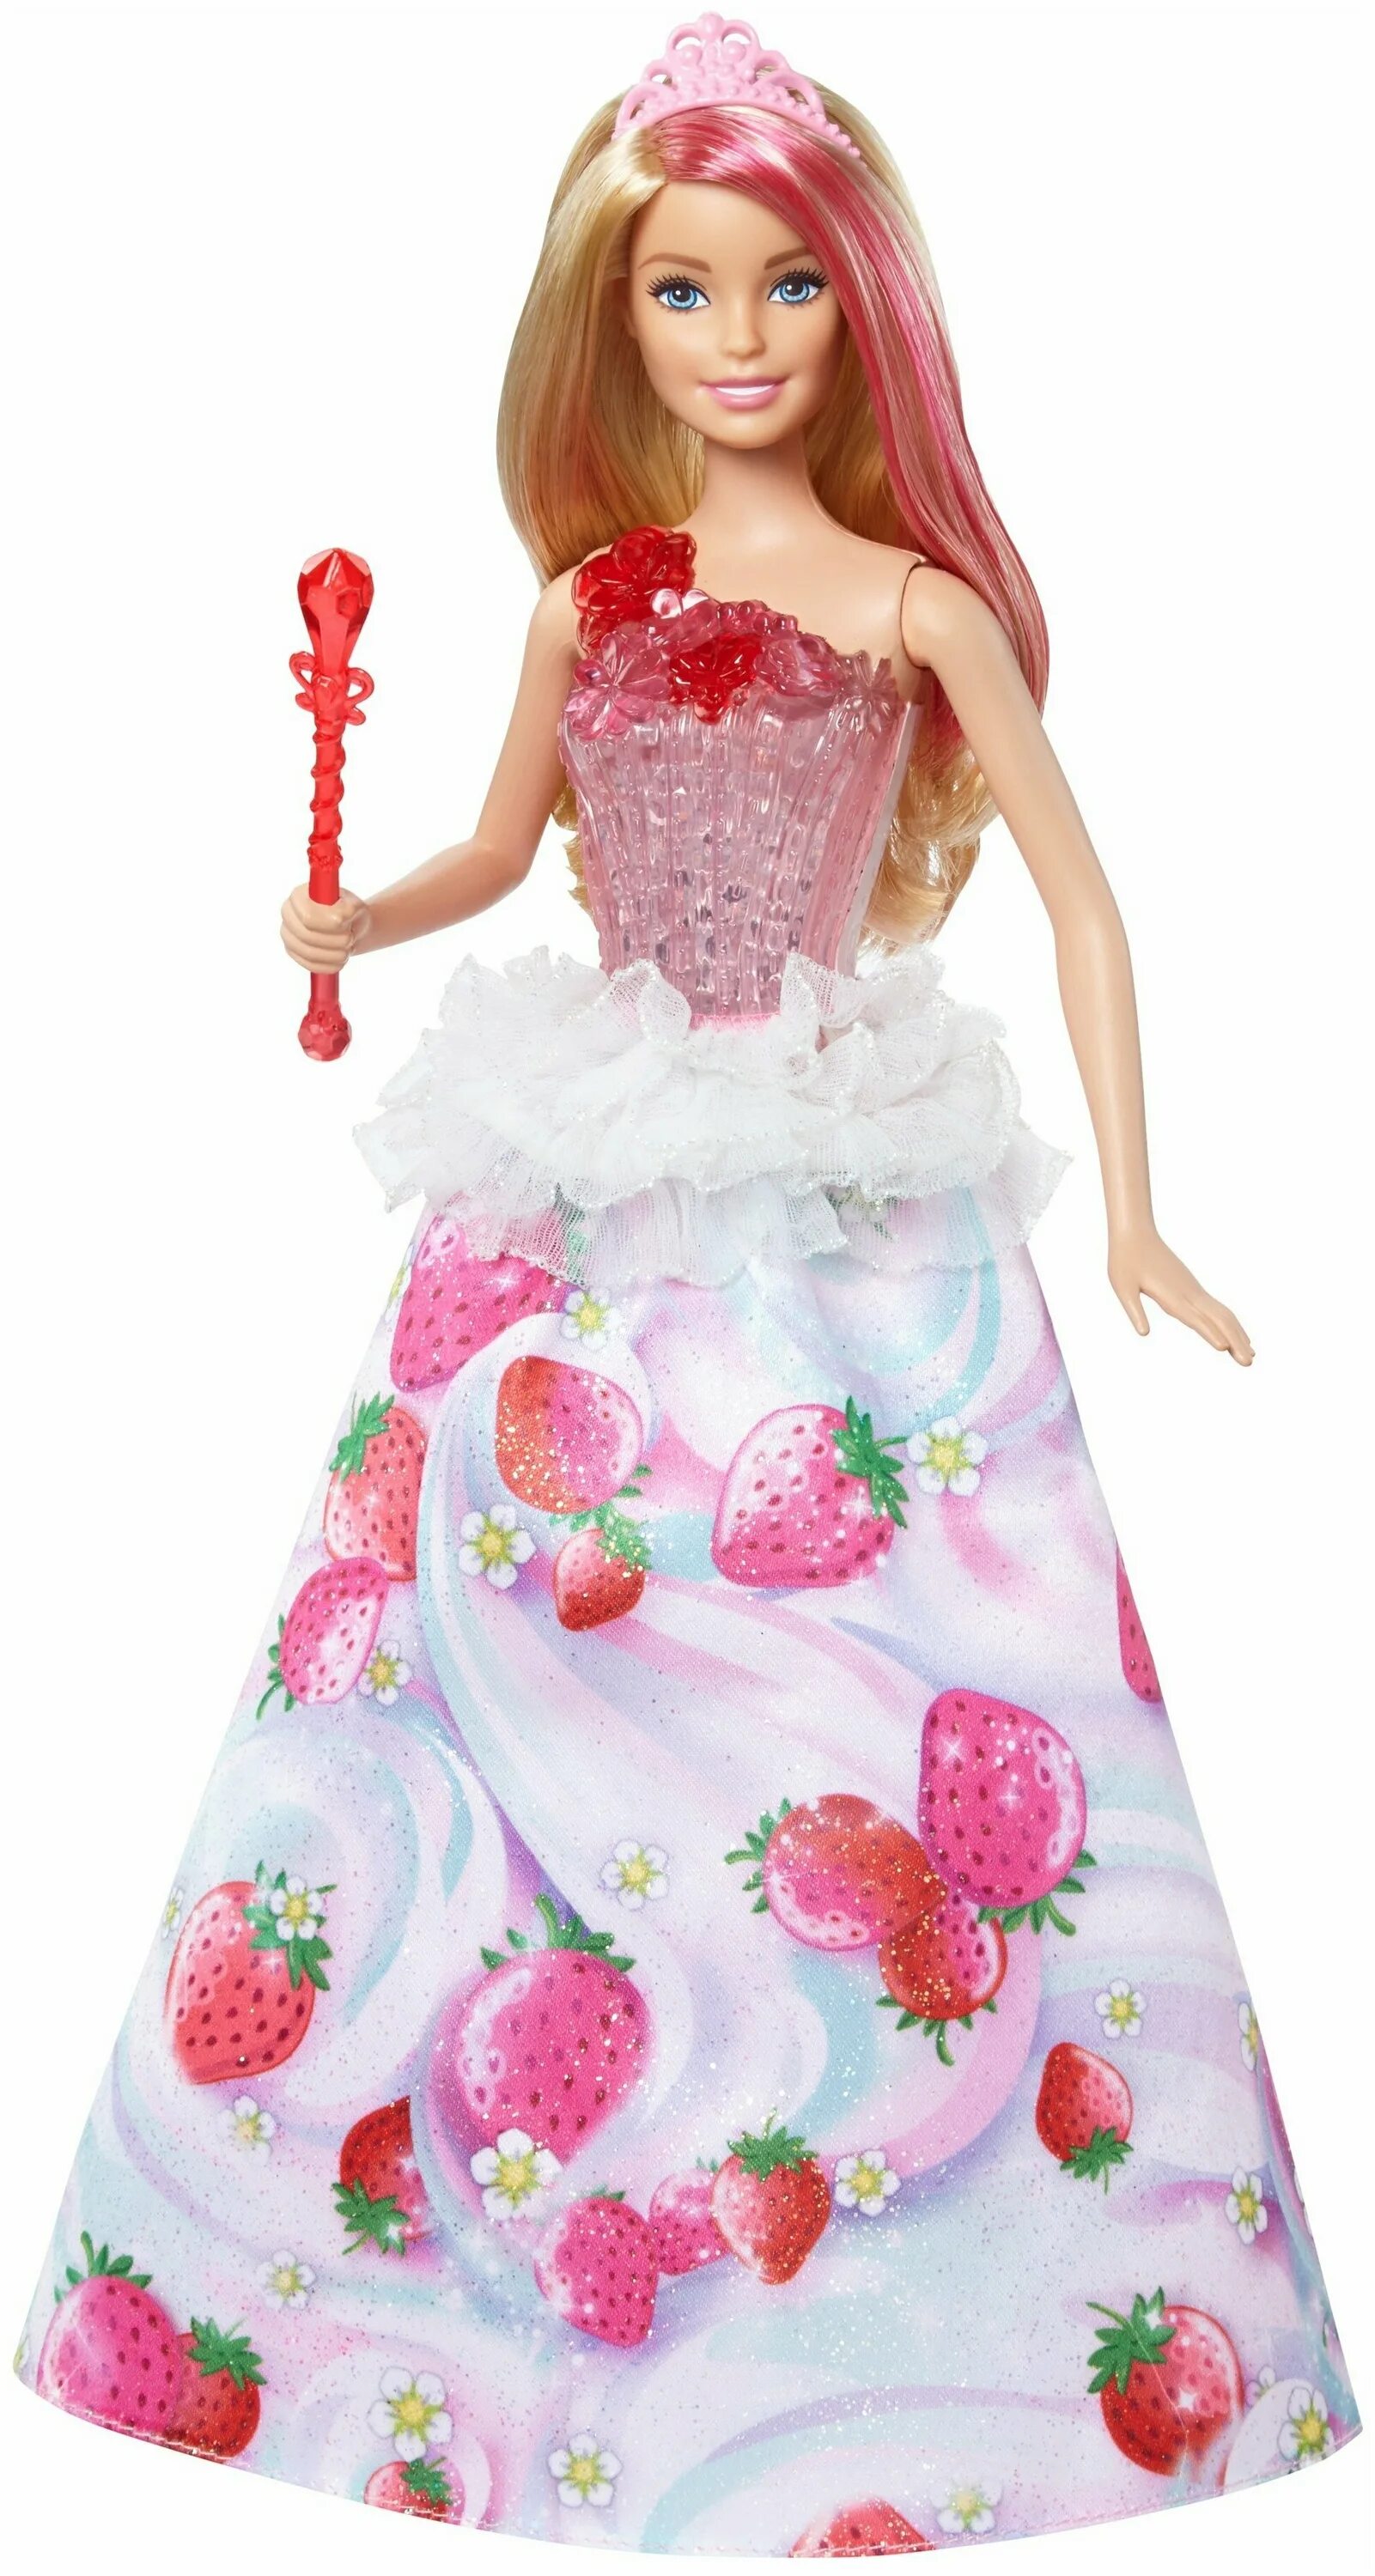 Купить куклу б у. Кукла Барби принцесса Дримтопия. Кукла Барби конфетная принцесса dyx28. Barbie принцесса Дримтопии. Кукла Барби Дримтопия конфетная принцесса.